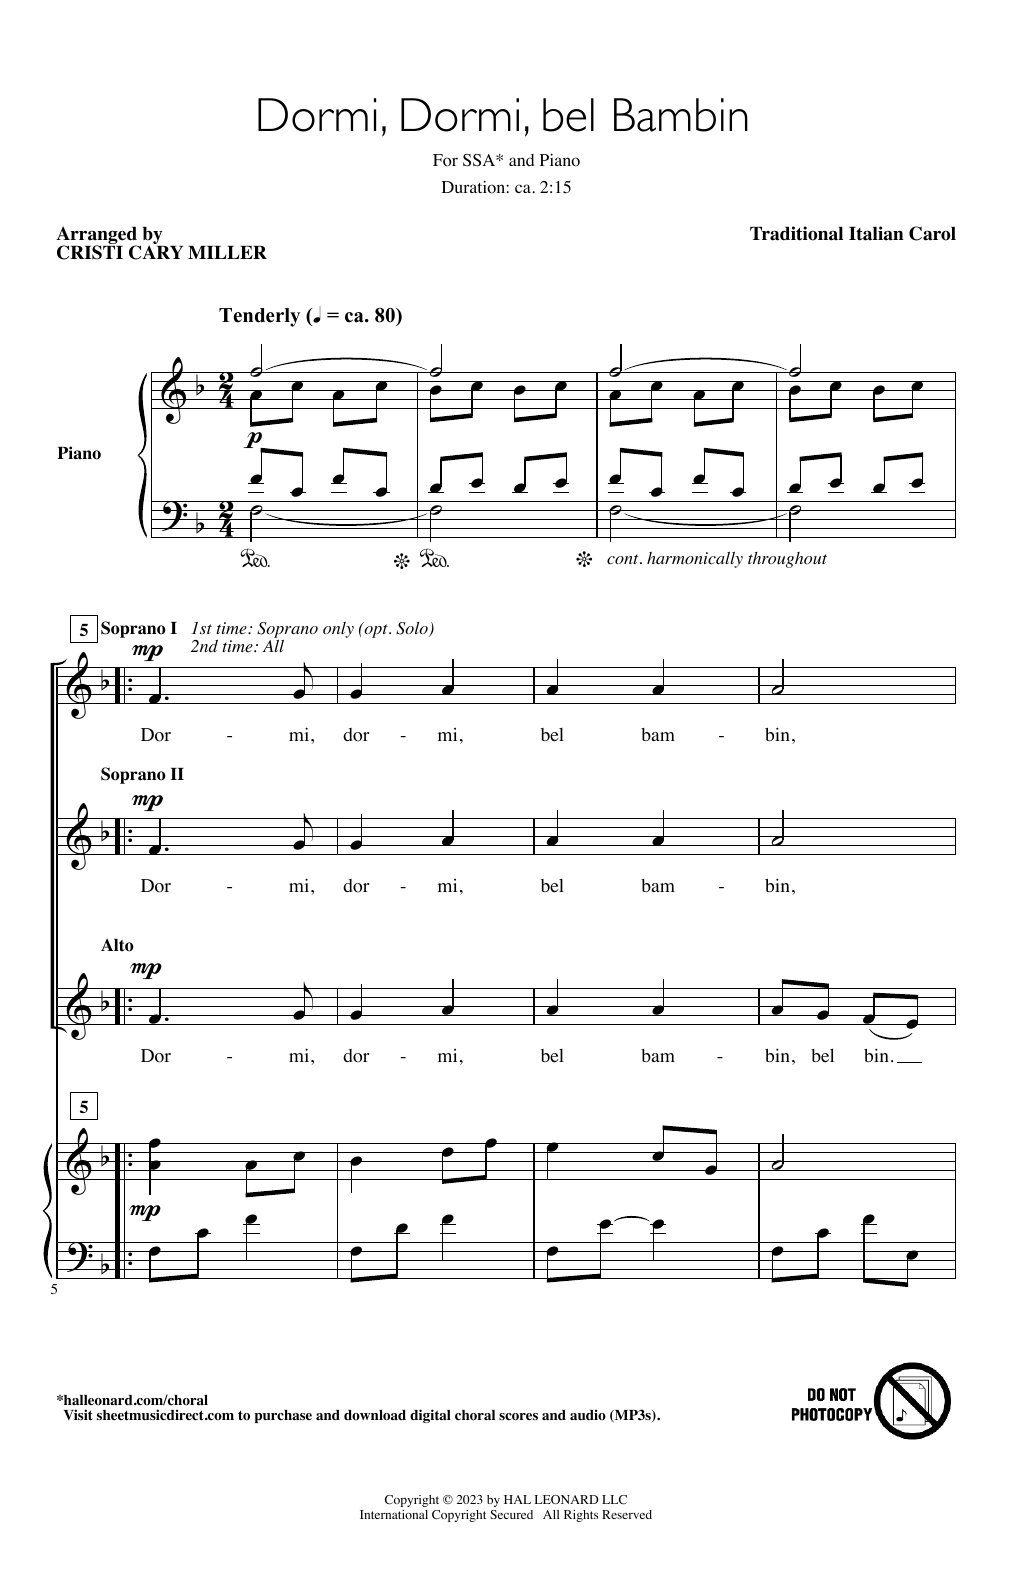 Traditional Italian Carol Dormi, Dormi Bel Bambin (arr. Cristi Cary Miller) Sheet Music Notes & Chords for SSA Choir - Download or Print PDF